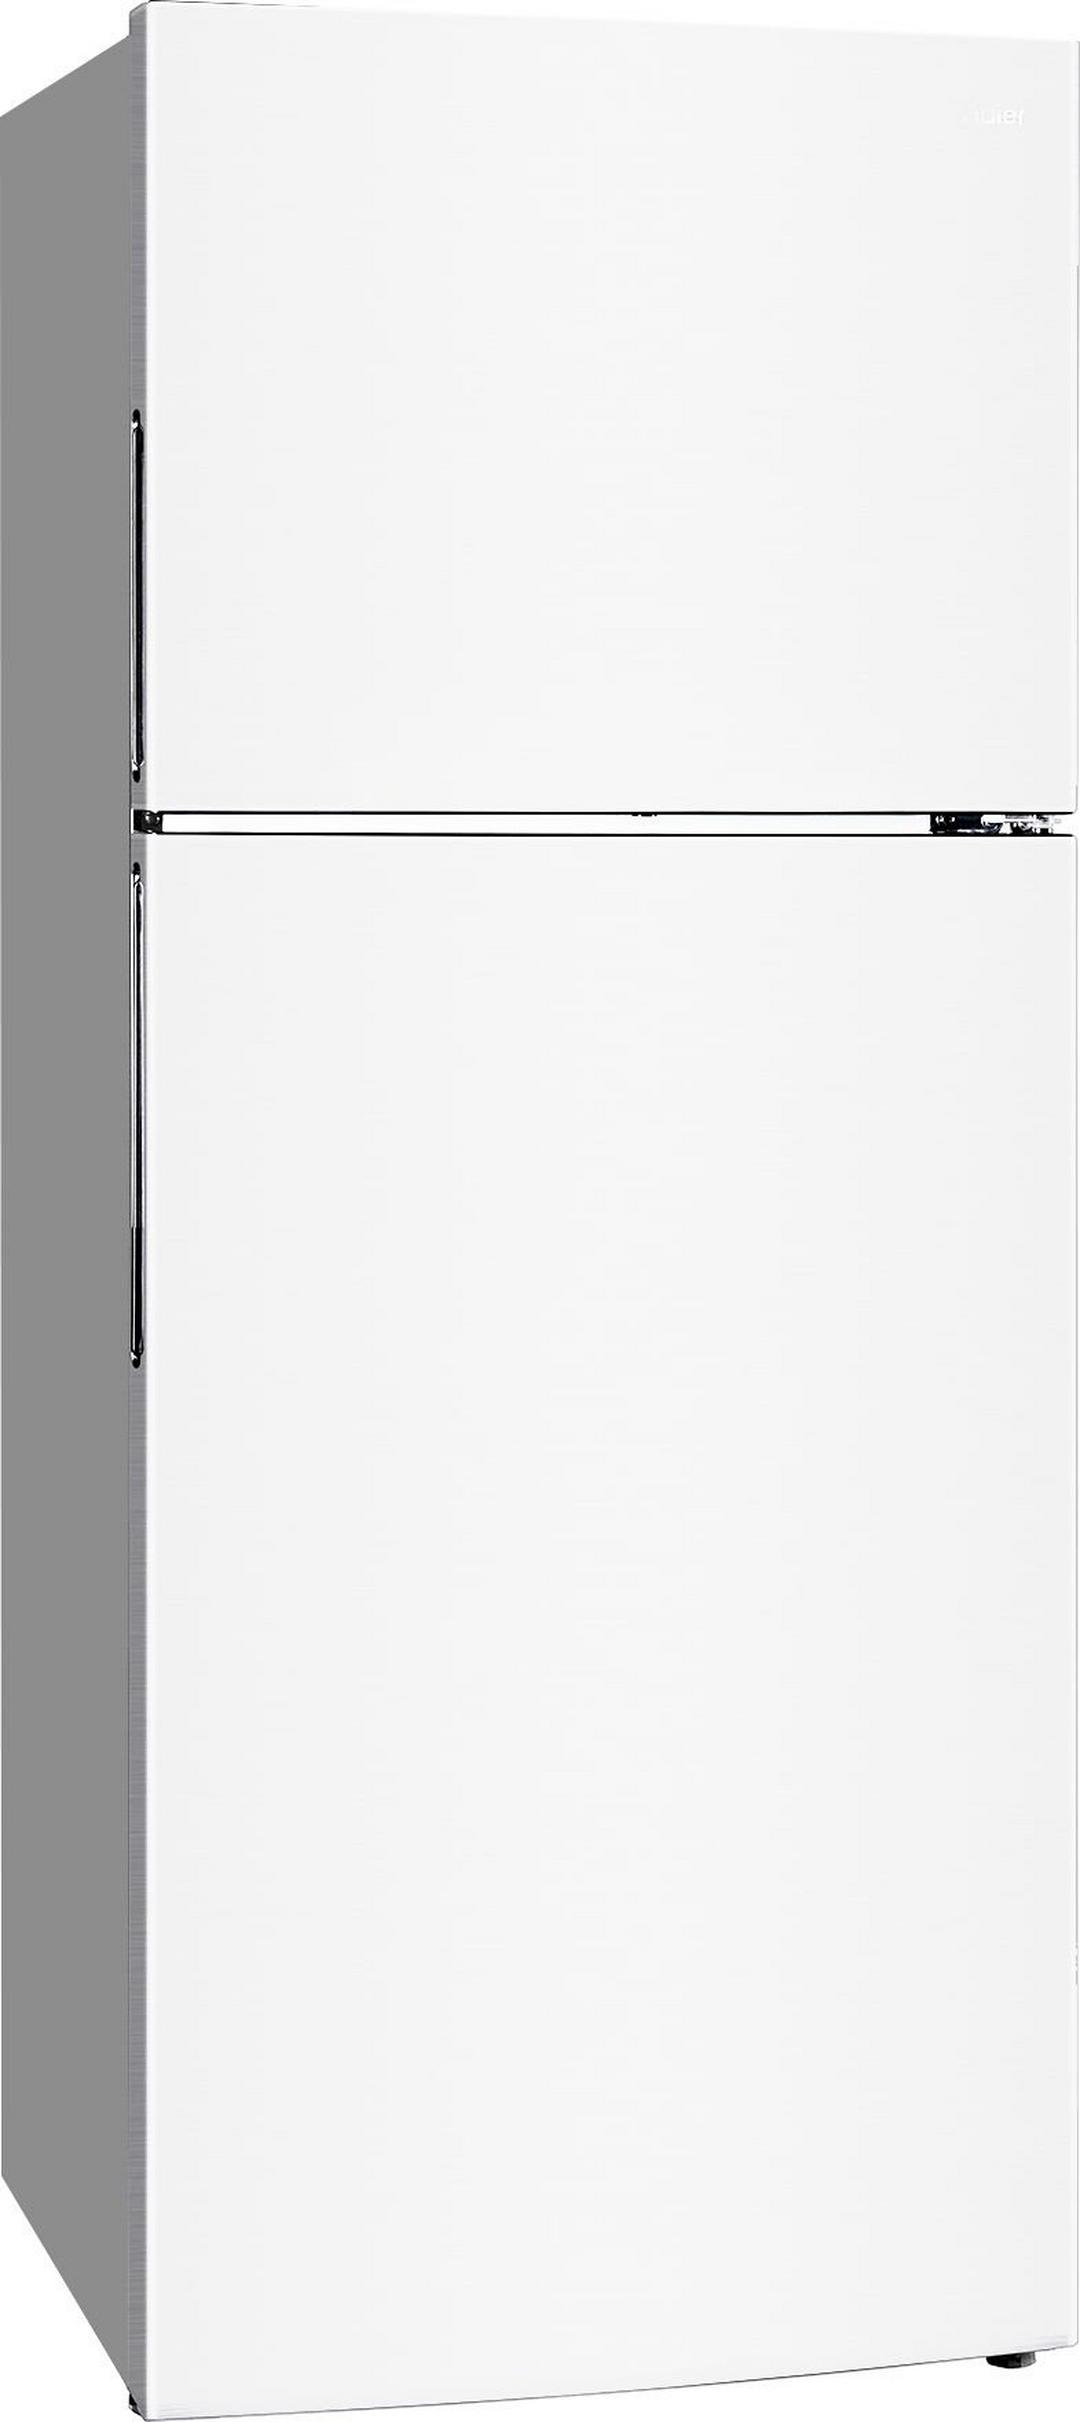 Haier 20CFT Top Mount Refrigerator (HRF-580-WW) - White